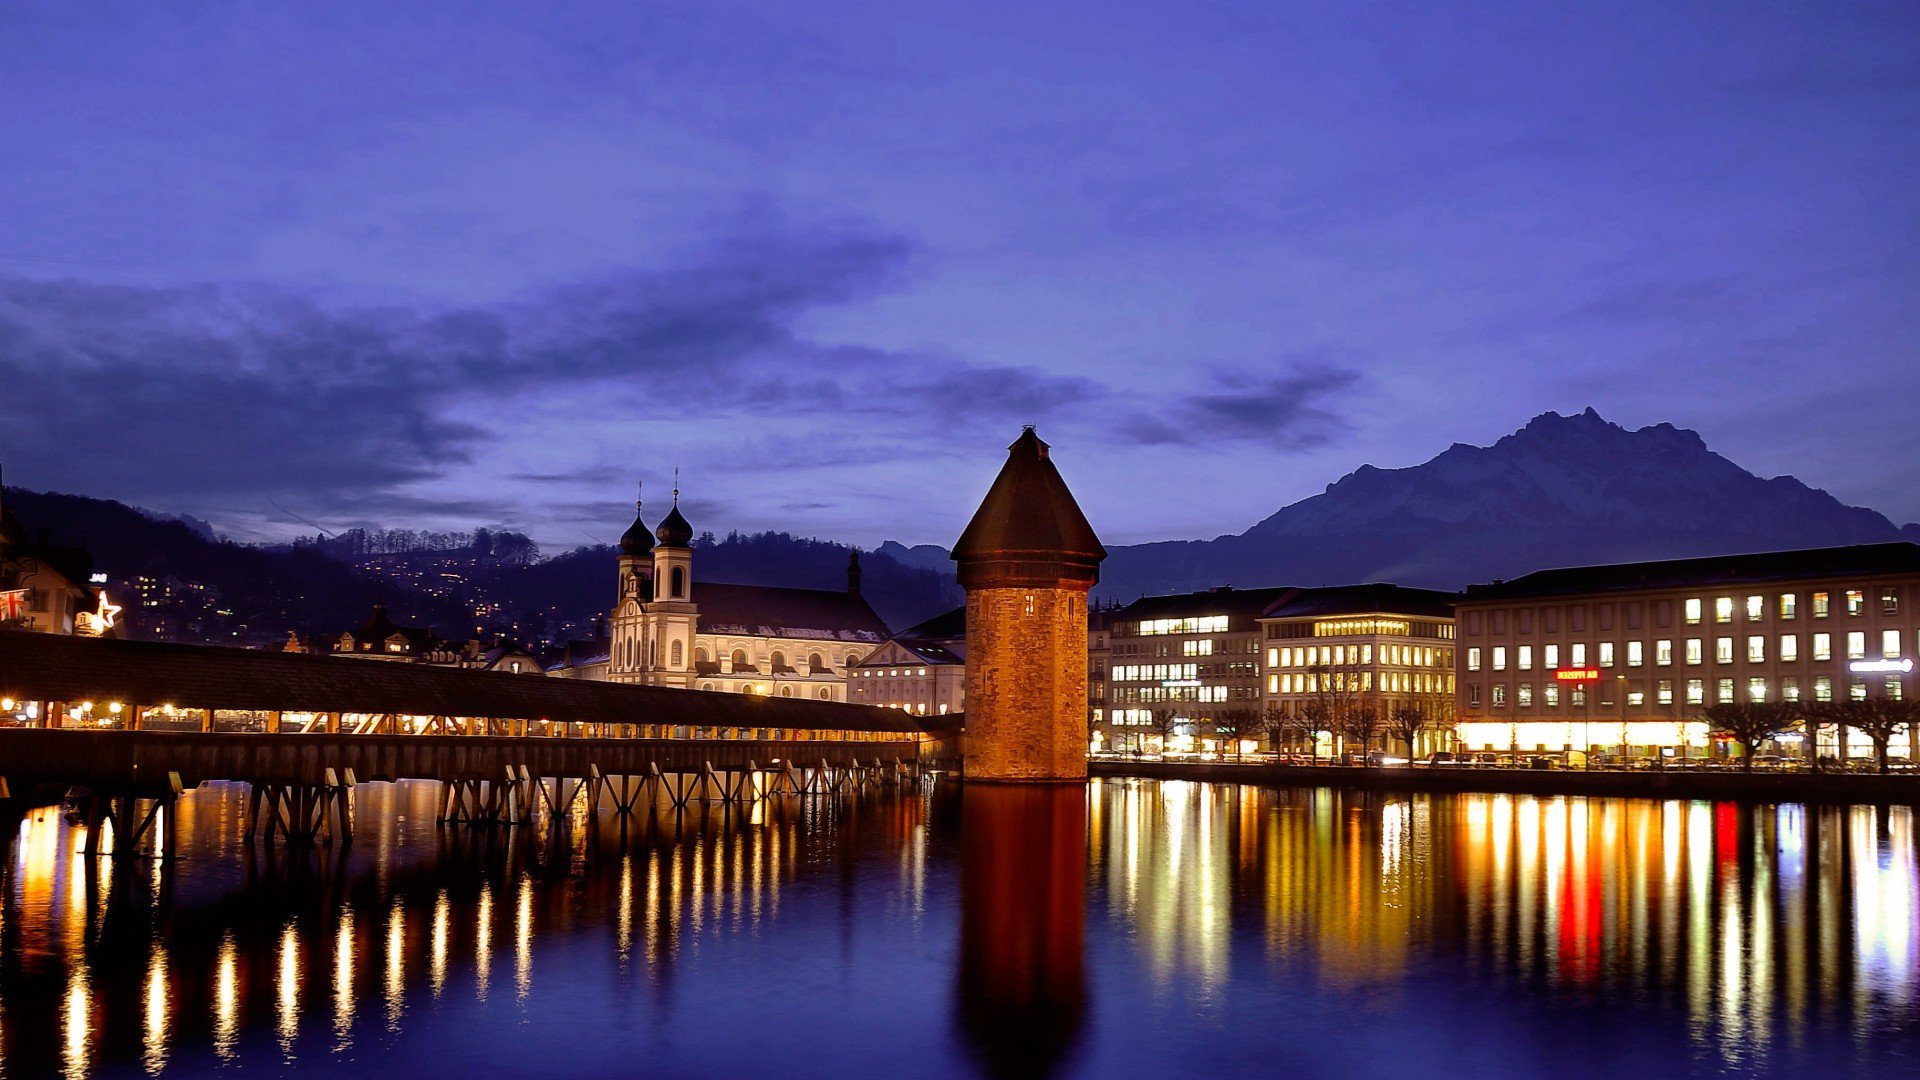 Switzerland Night, HD World, 4k Wallpapers, Images ...